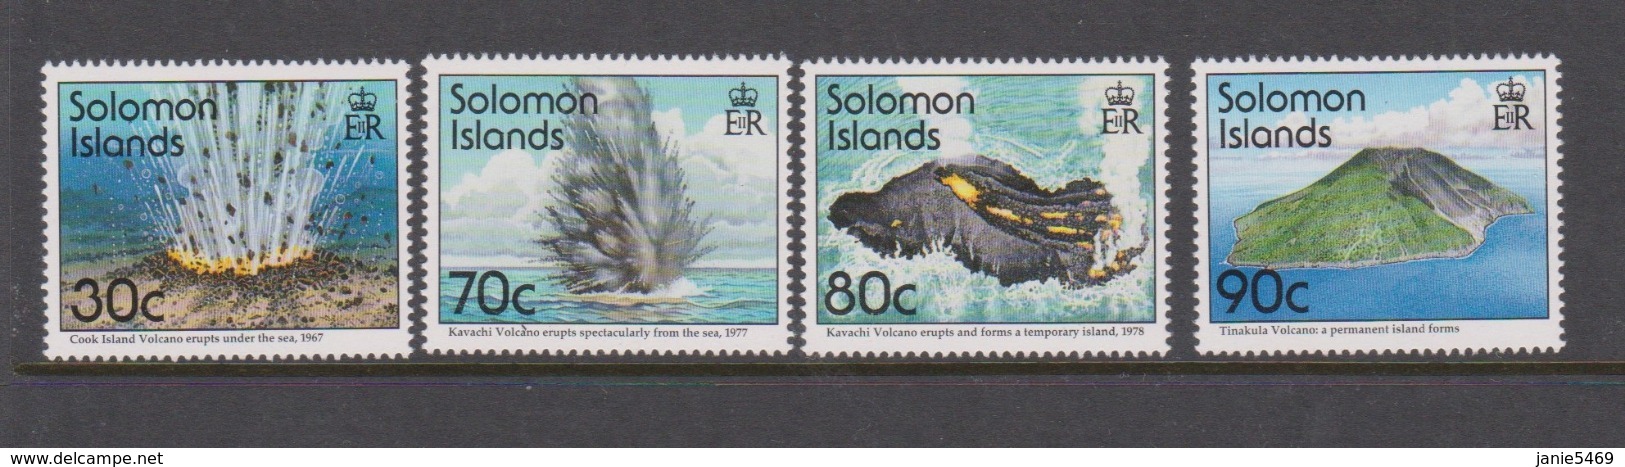 Solomon Islands SG 812-815 1994 Volcanoes,mint  Never Hinged - Solomon Islands (1978-...)